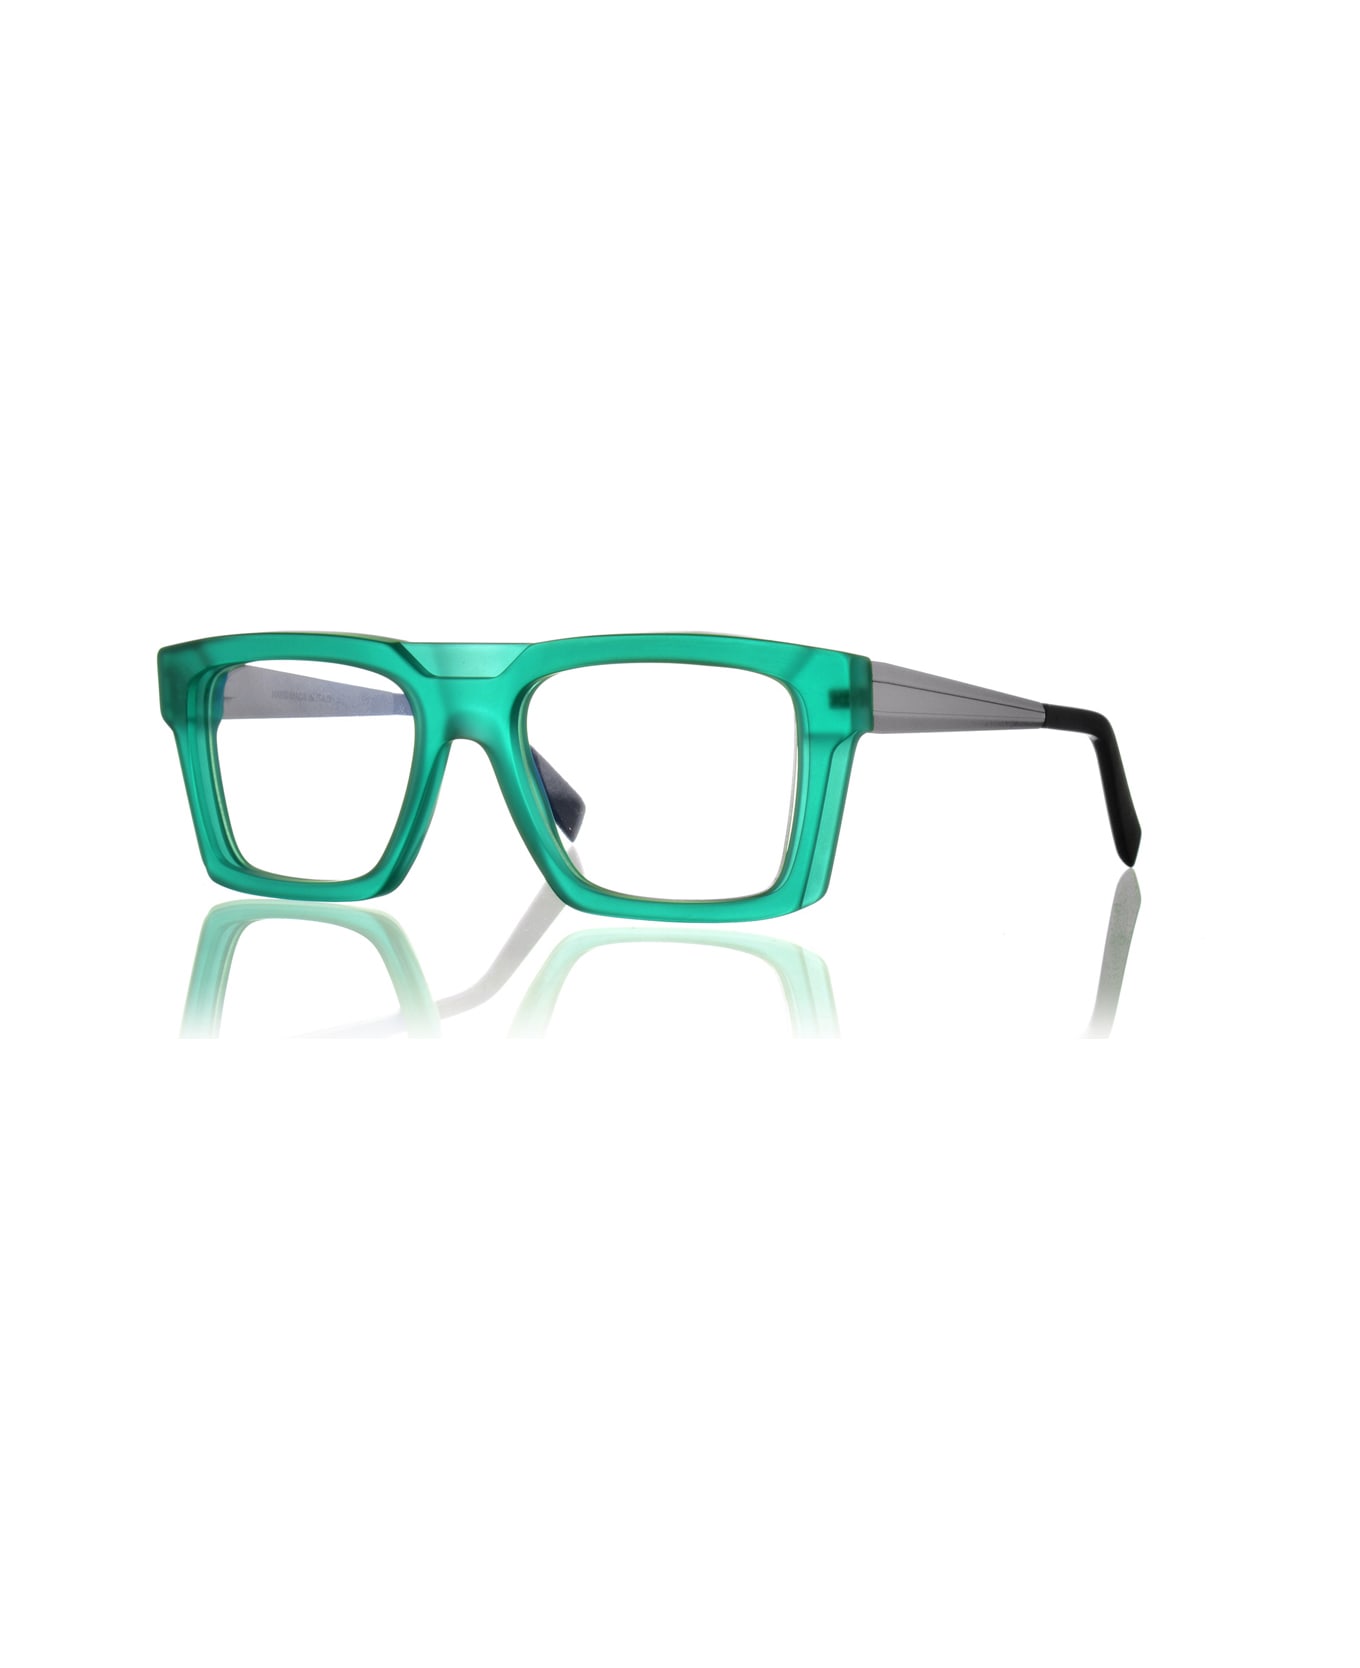 Kirk & Kirk William F4/s Jungle Glasses - Verde